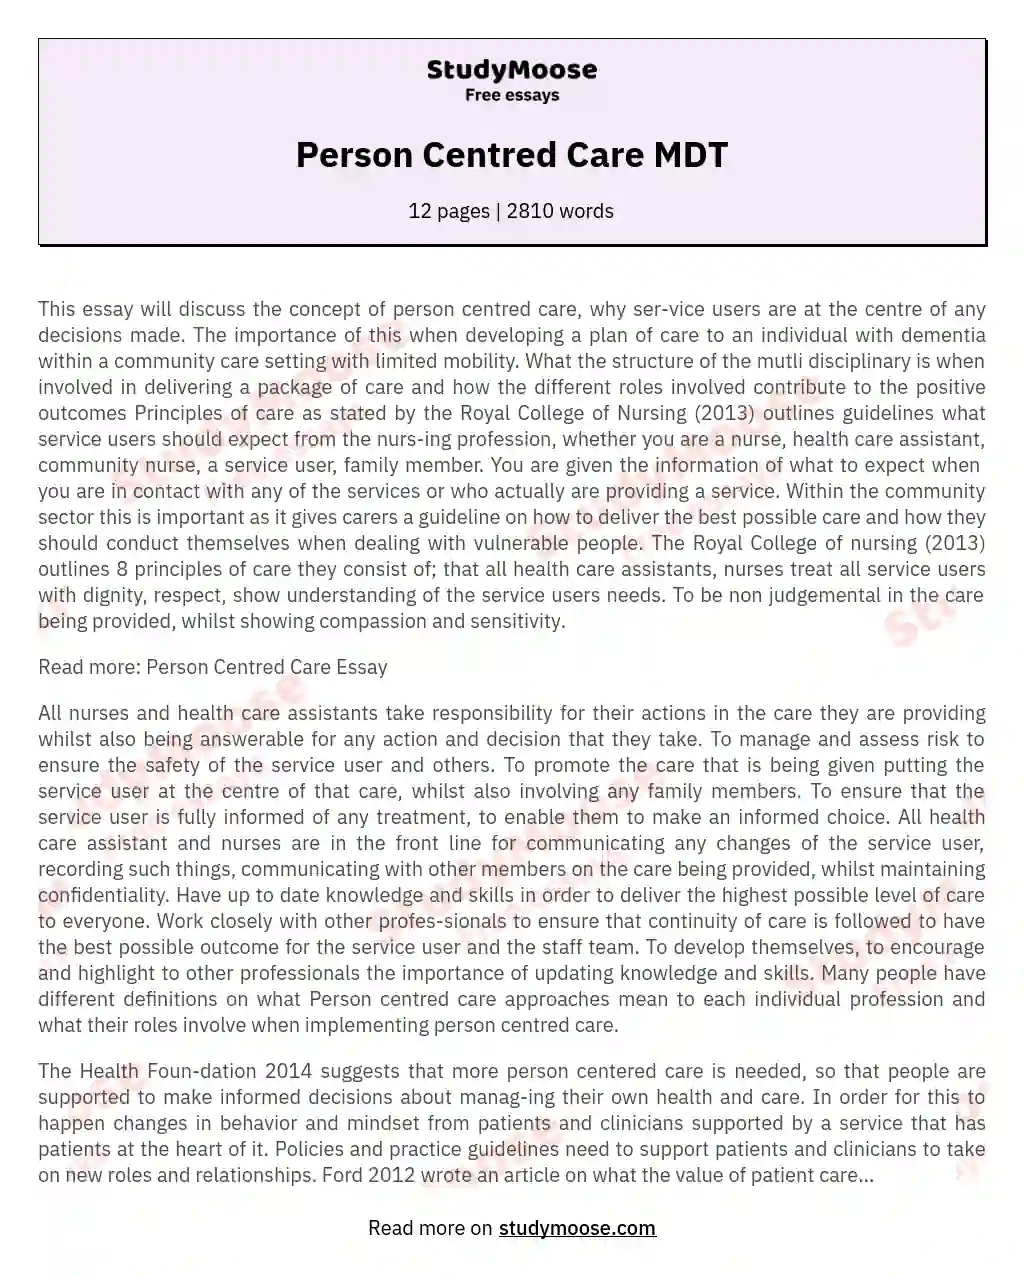 Person Centred Care MDT essay